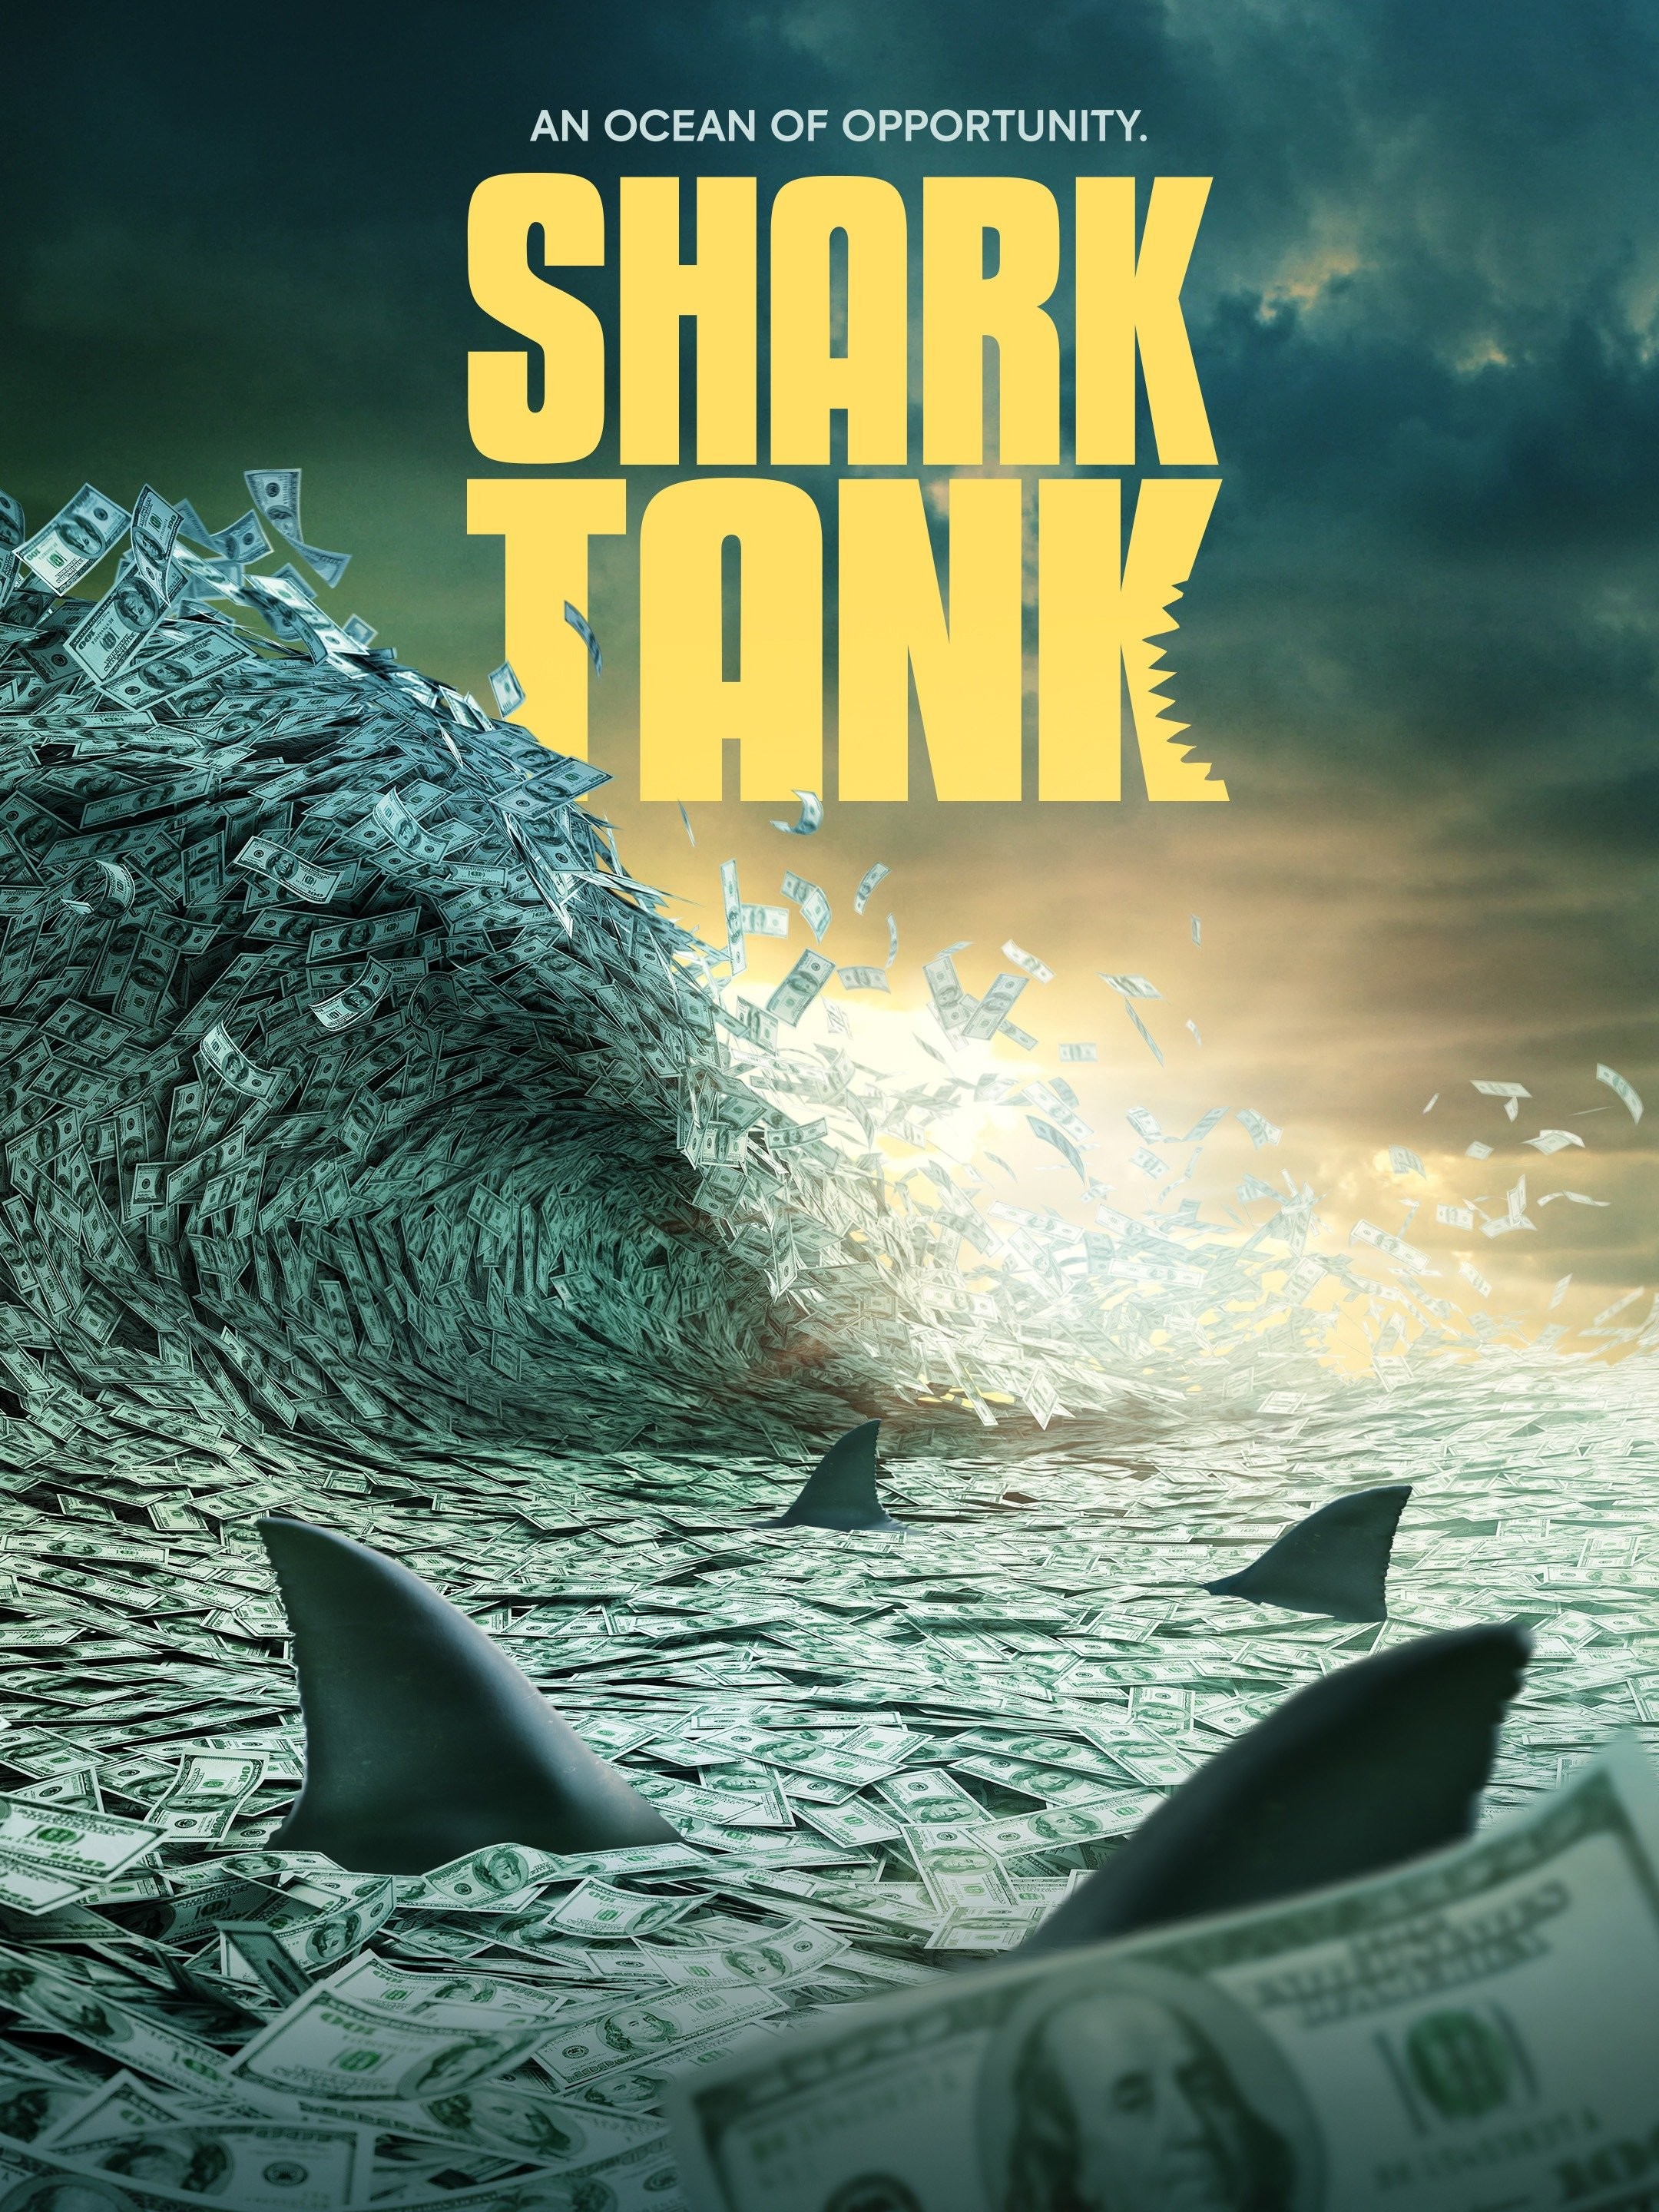 Video Audience members enter the Shark Tank! - ABC News